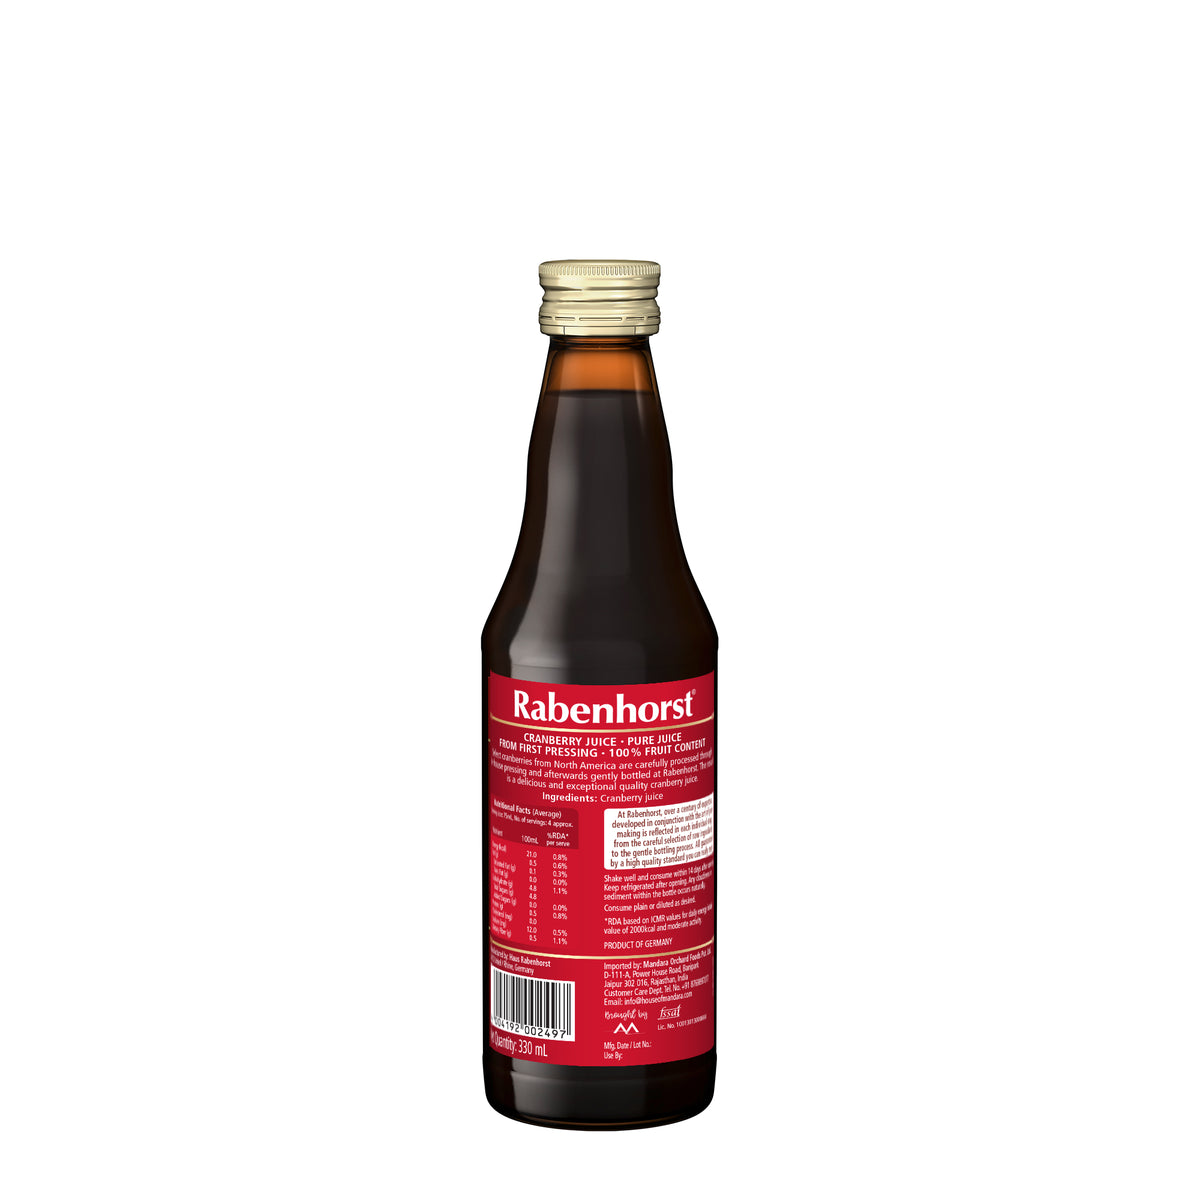 Rabenhorst - Pure Cranberry Juice (Unsweetened), 330 mL